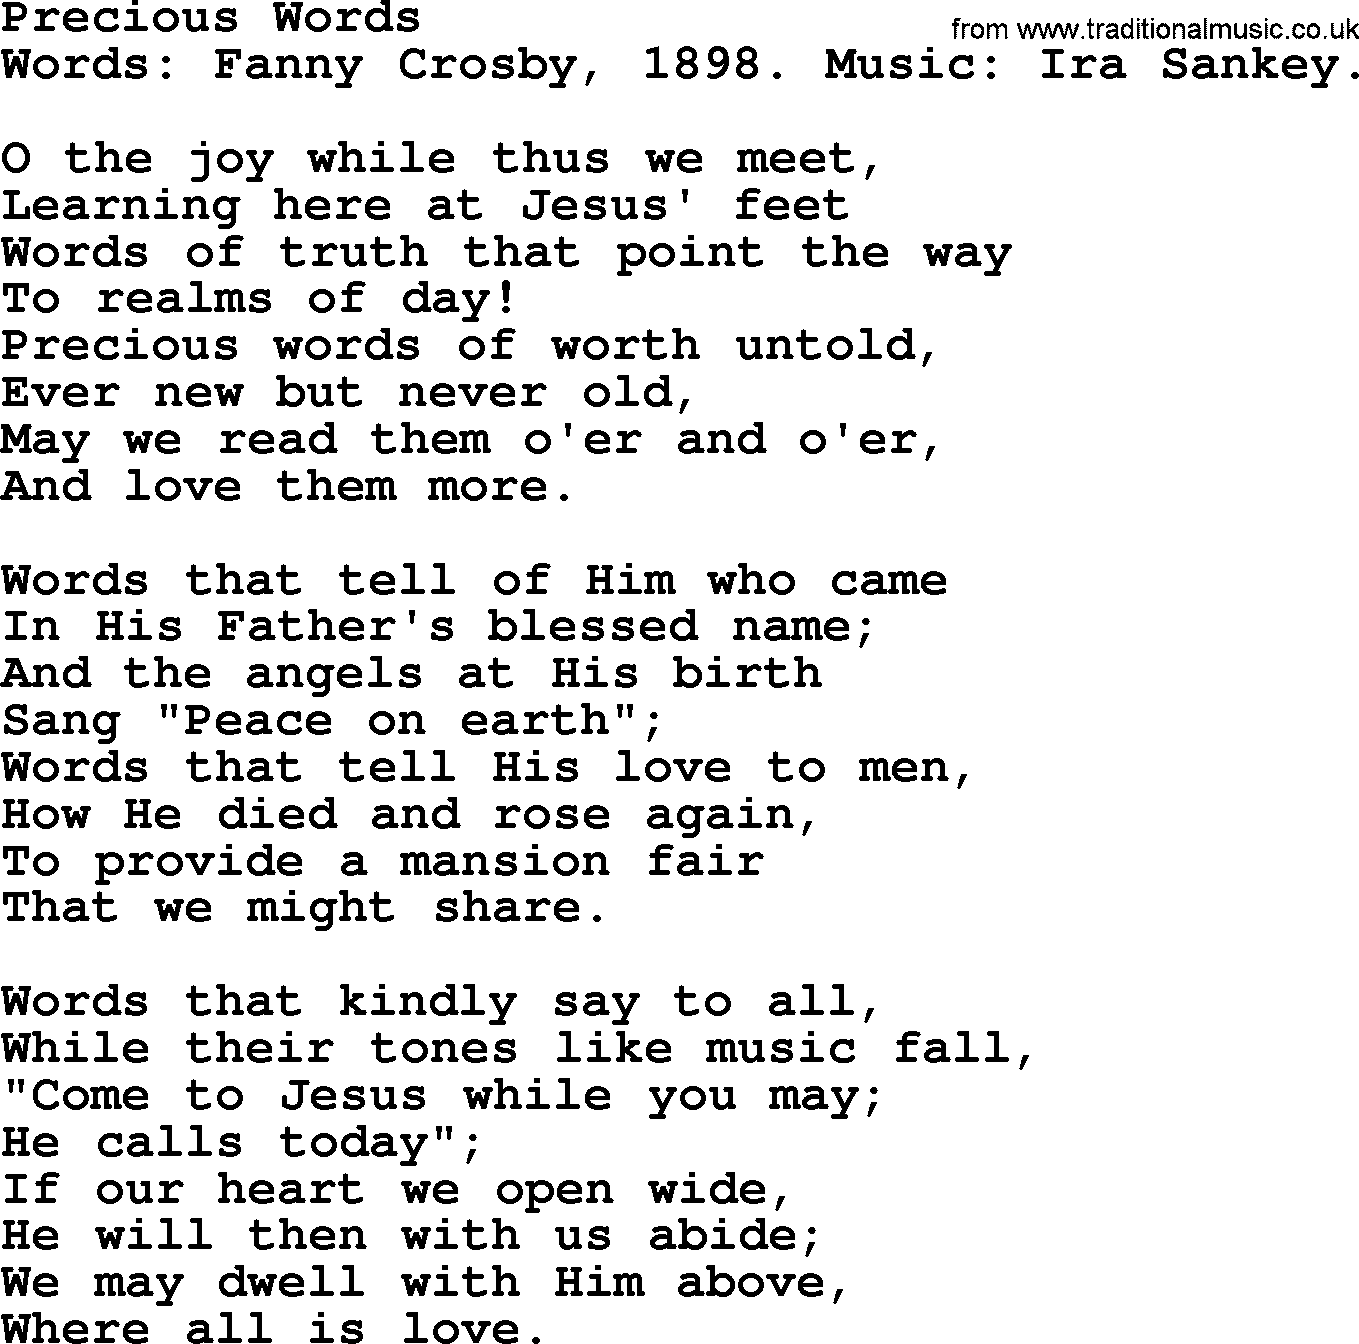 Fanny Crosby song: Precious Words, lyrics